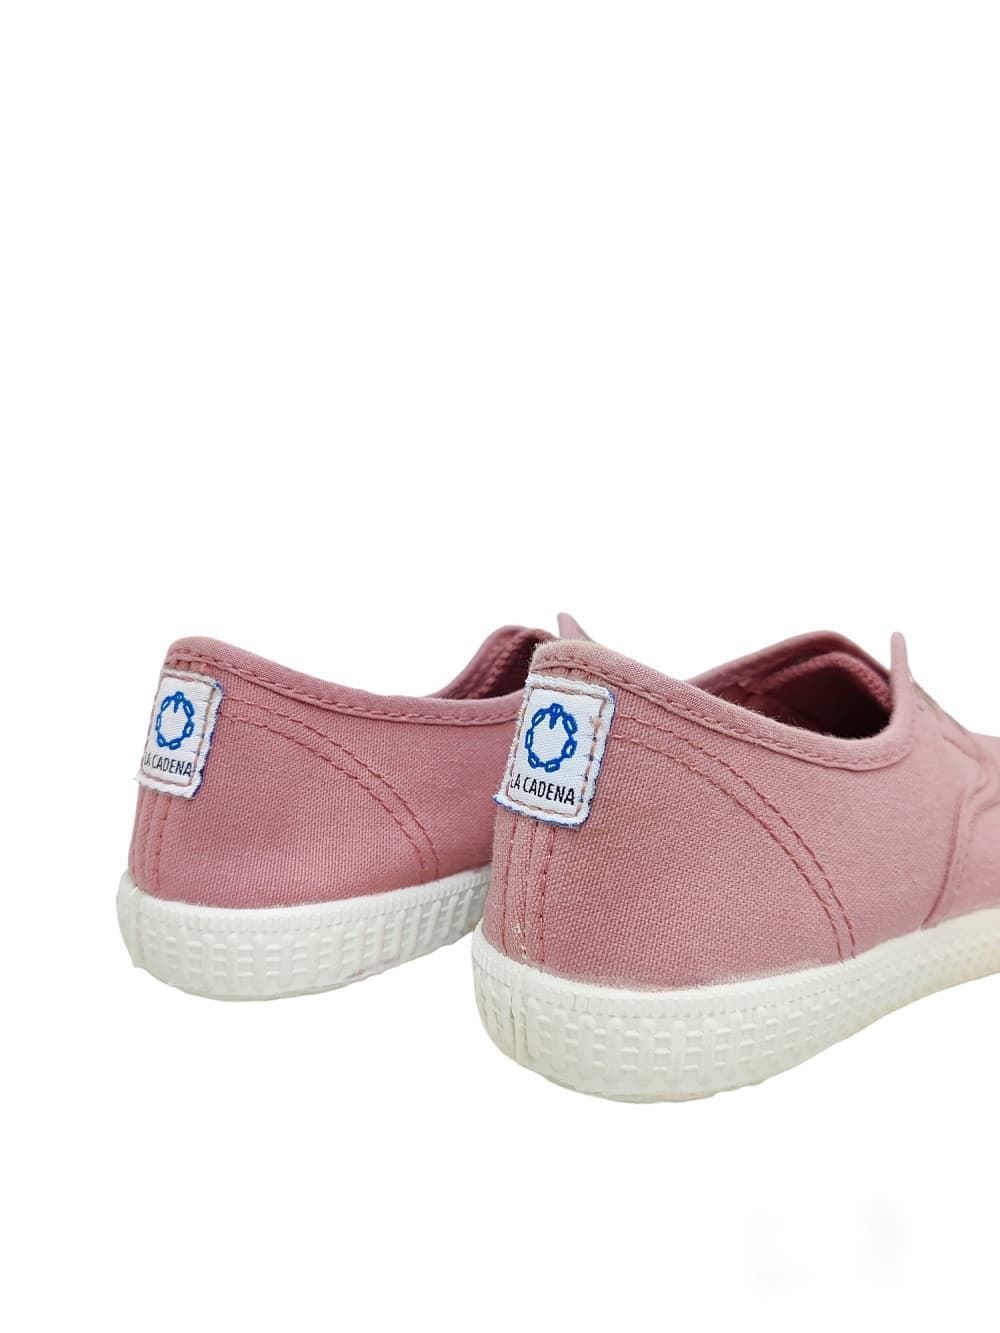 La Cadena Children's Sneakers Pale Pink Canvas with Toe - Image 3